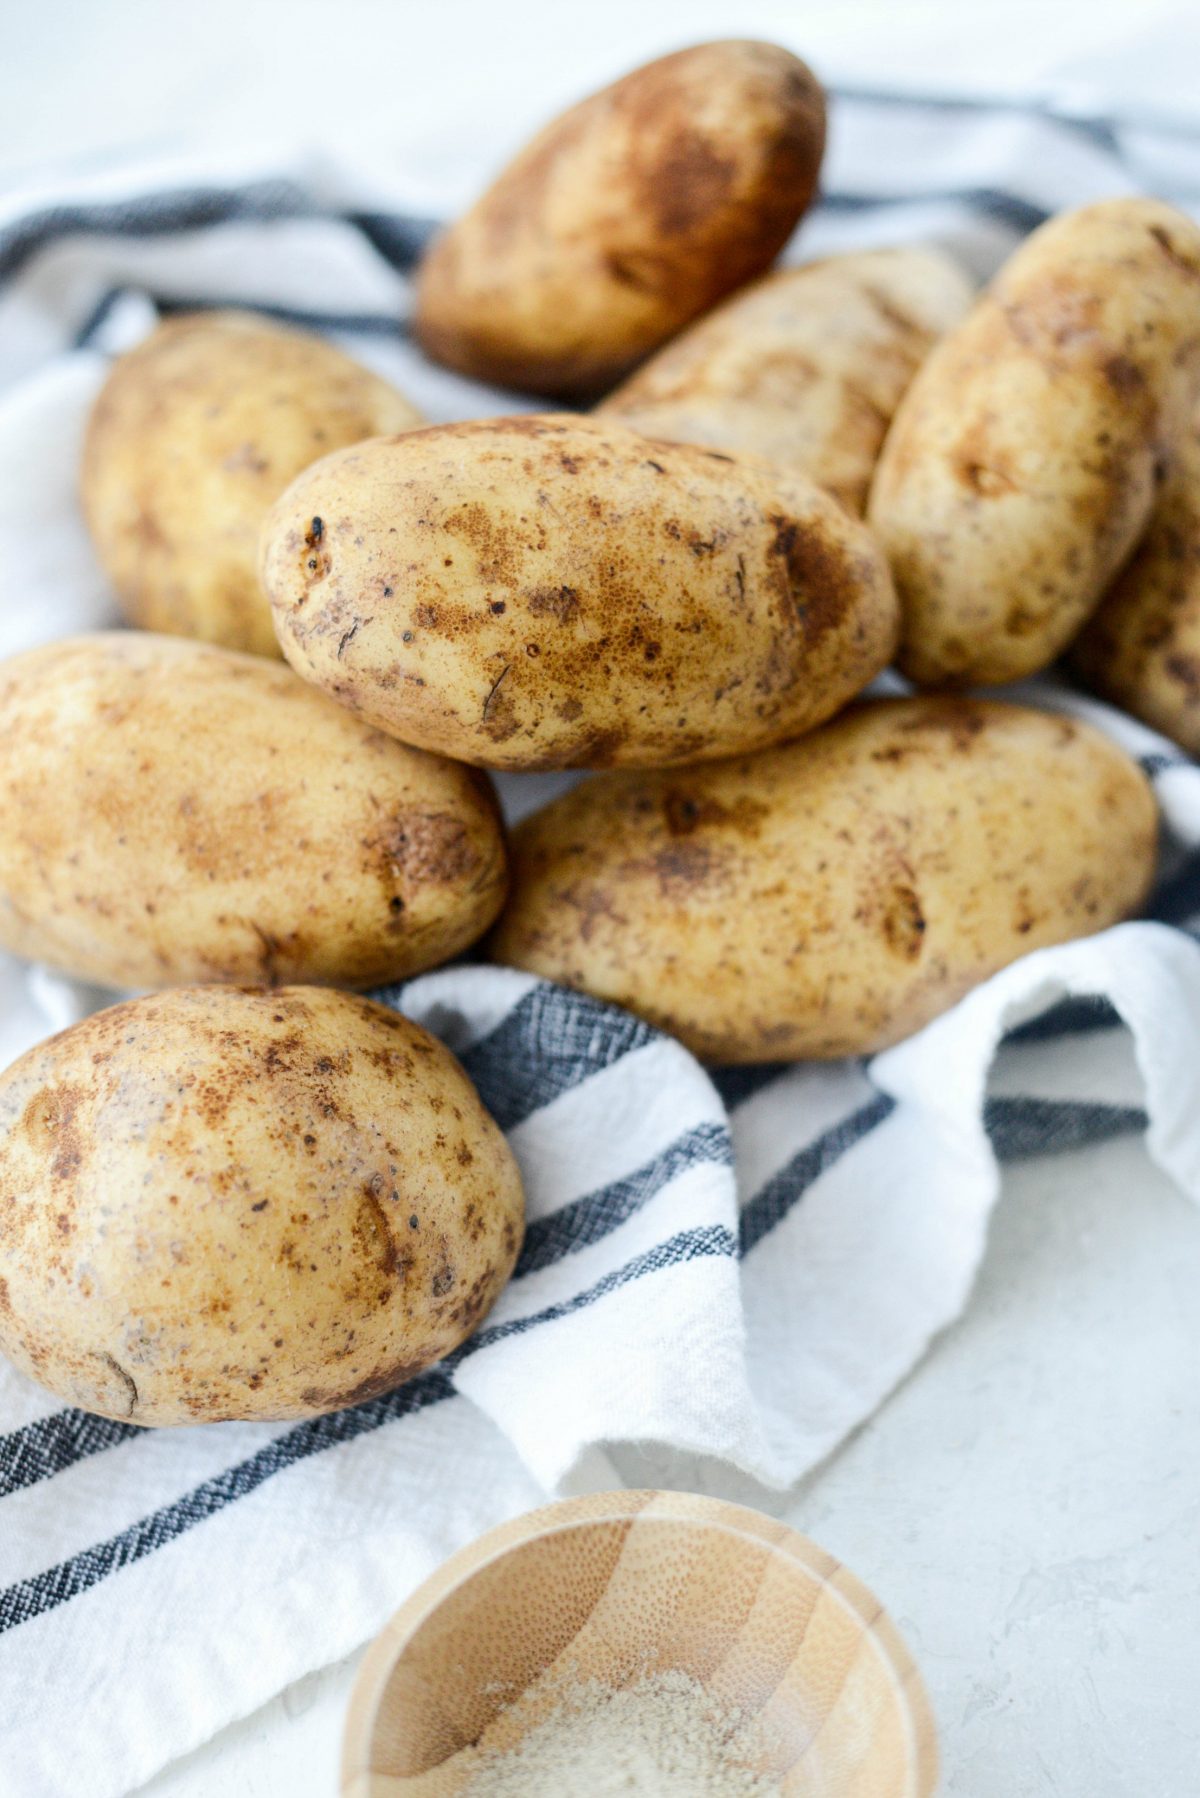 wash russet potatoes or use Yukon Golds 